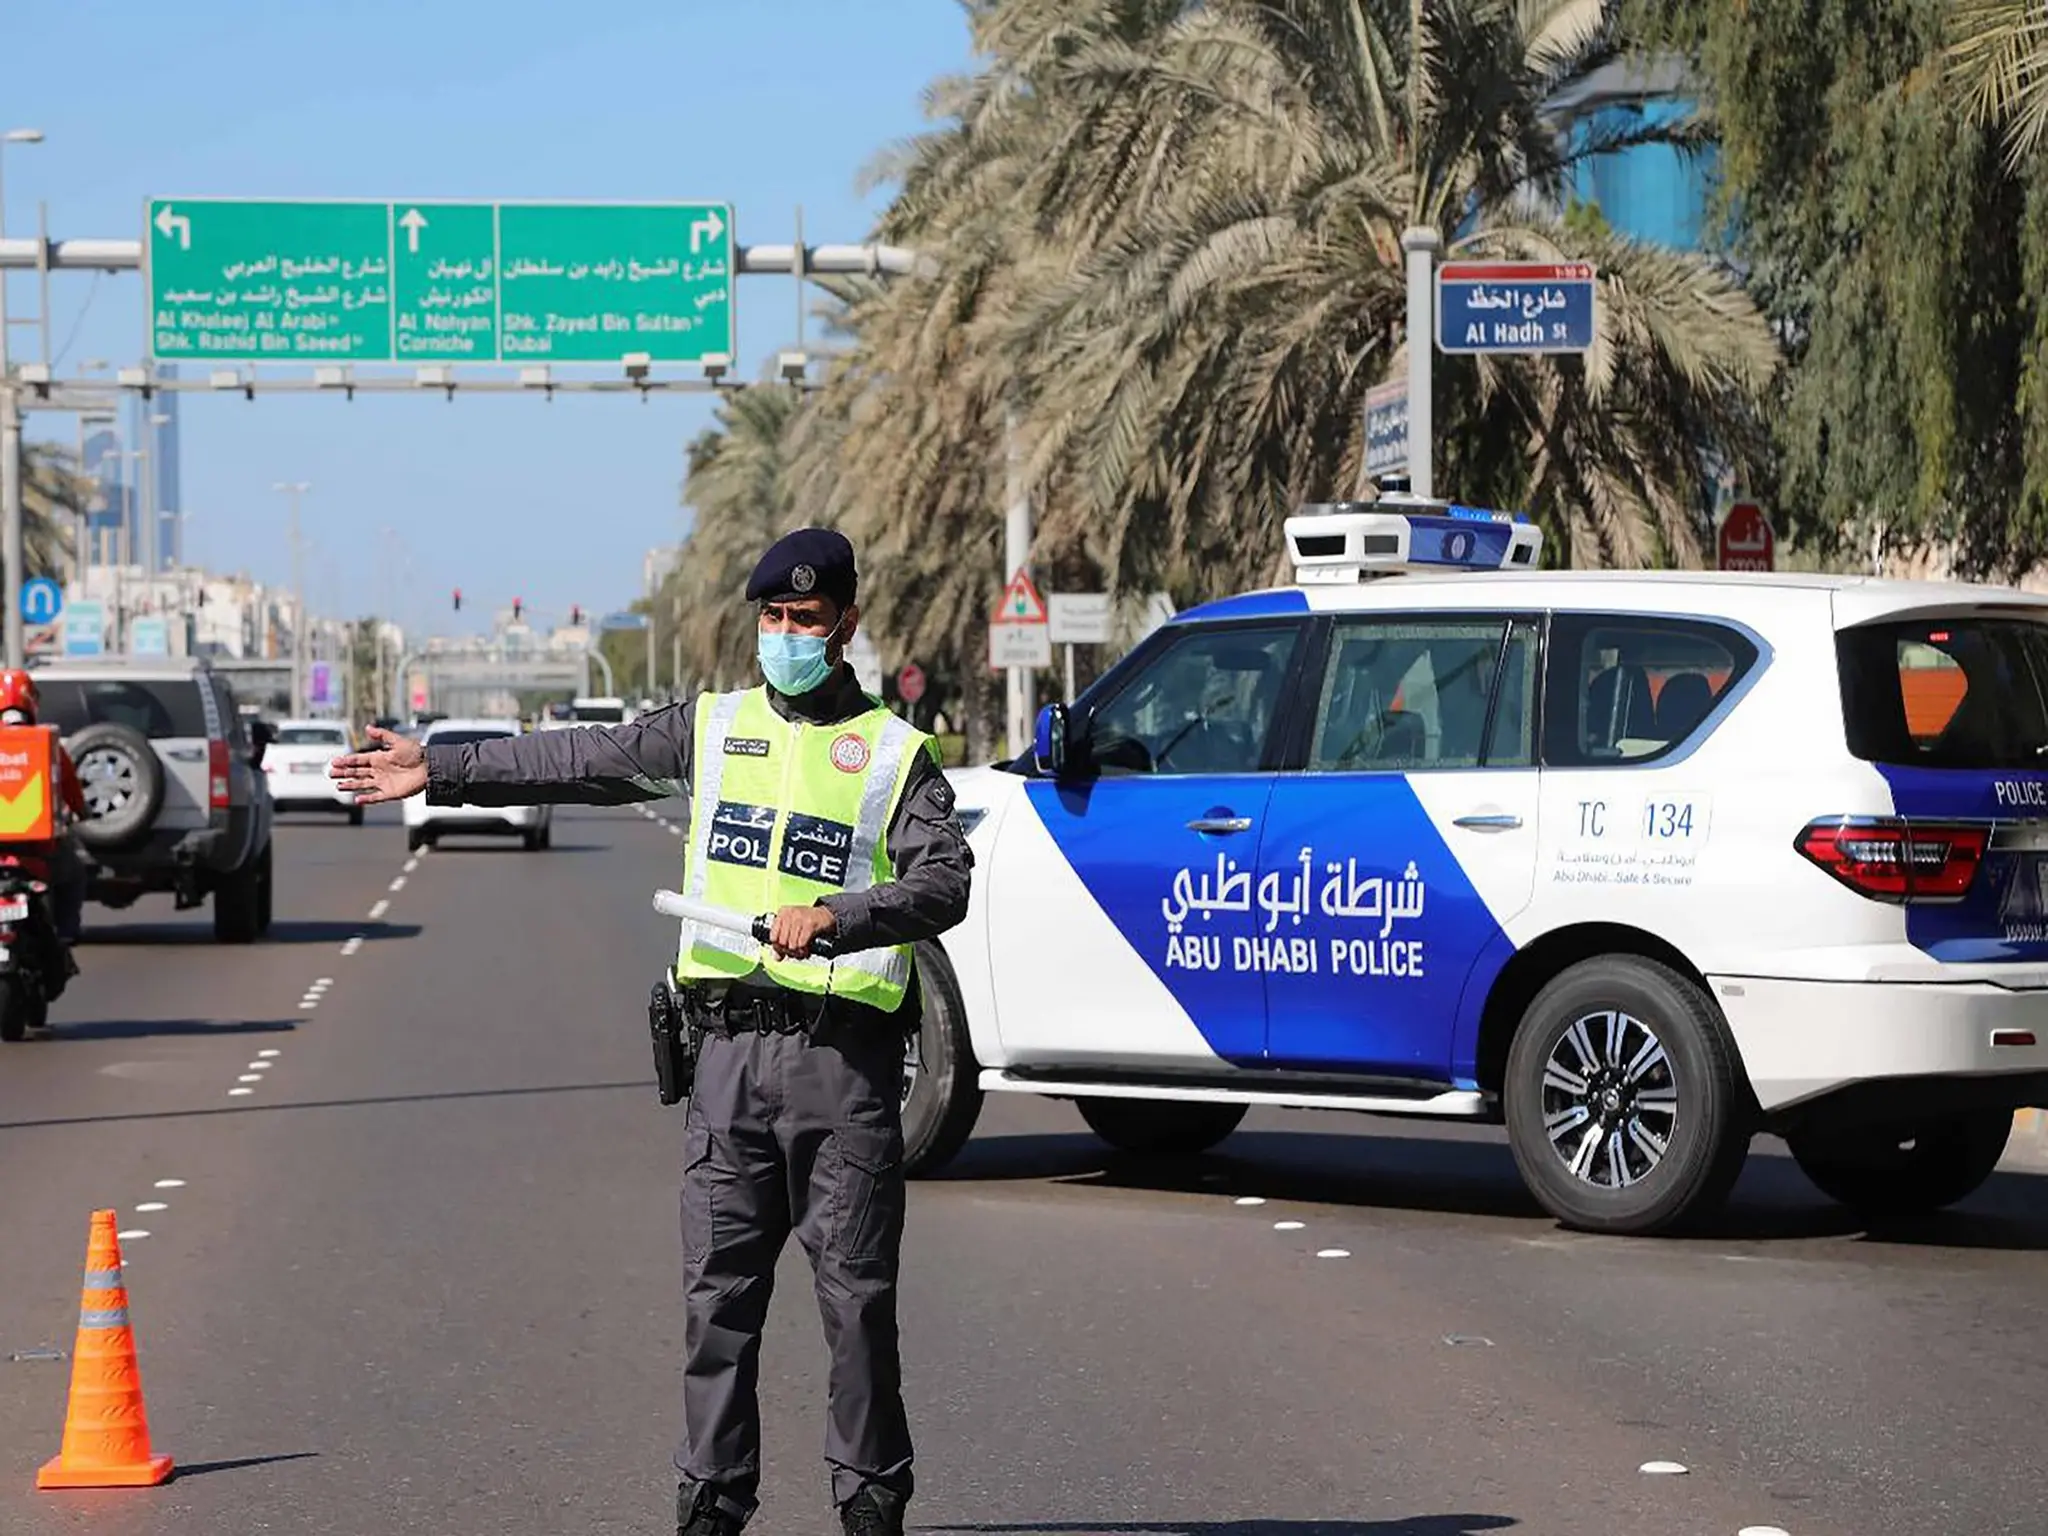 Abu Dhabi Police: Starting to catch speeding violators on Sheikh Mohammed bin Rashid Road